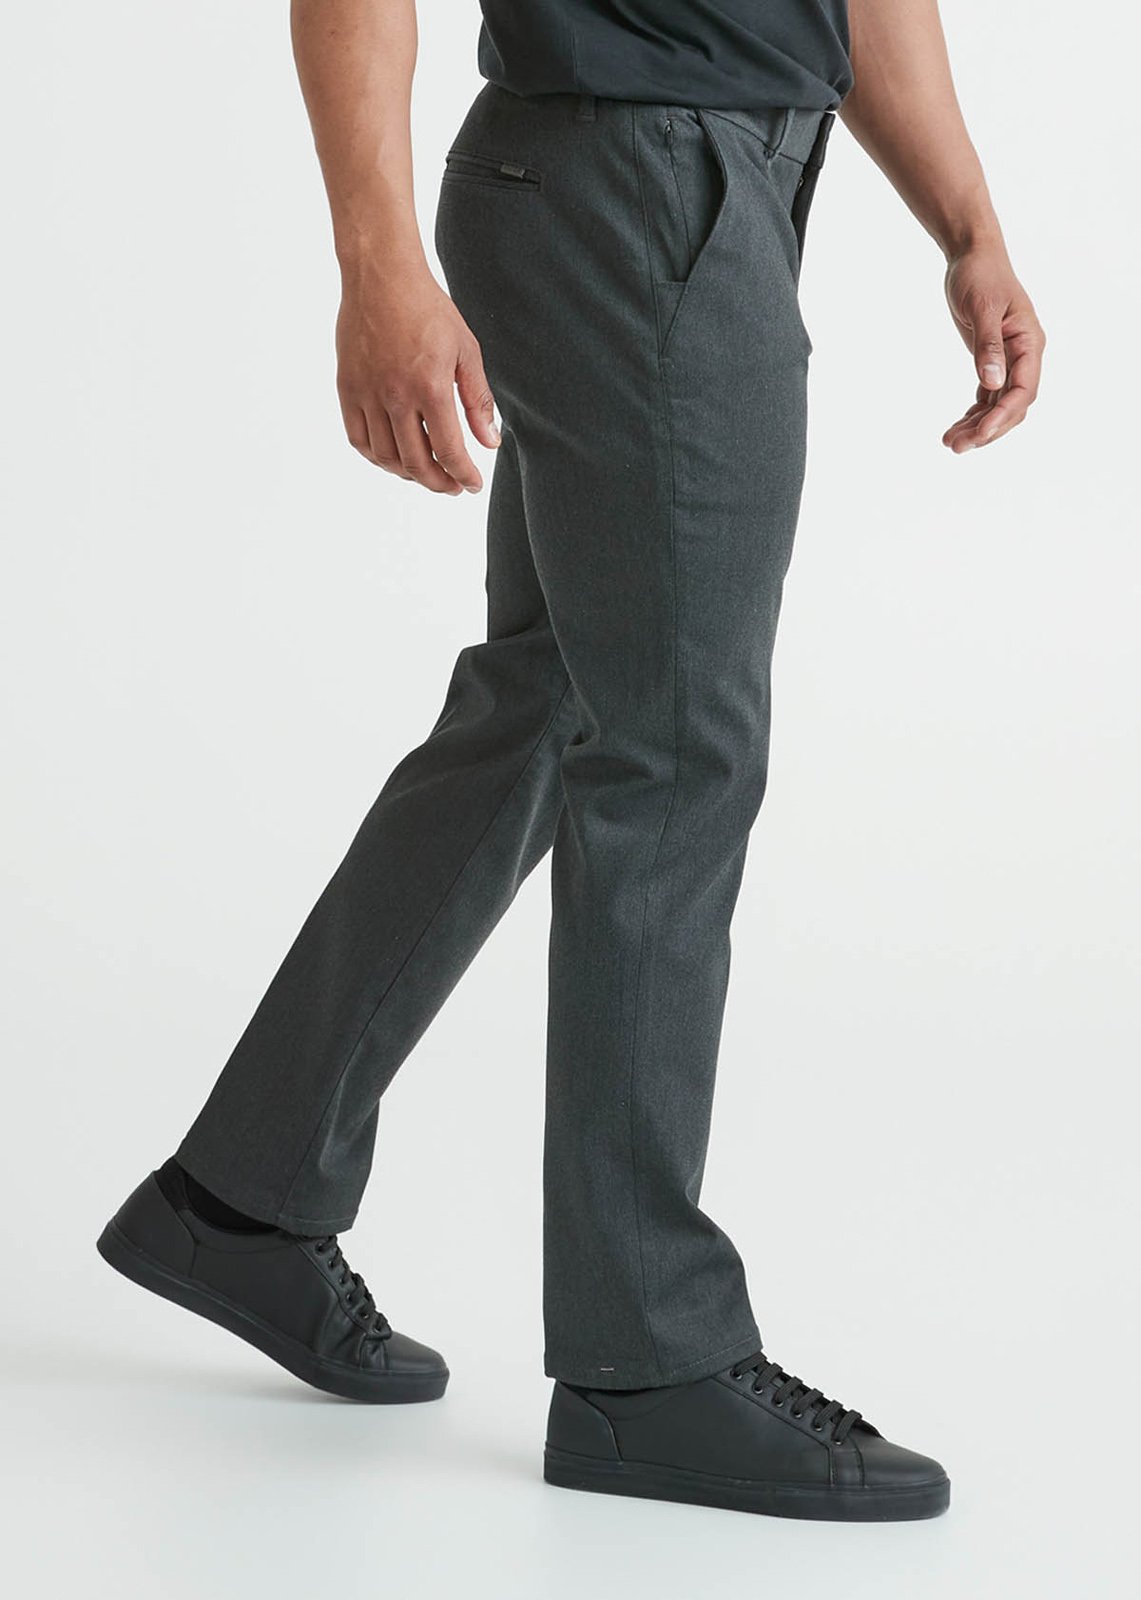 DUER pants. Smart Stretch Slim. Gray. 32/32